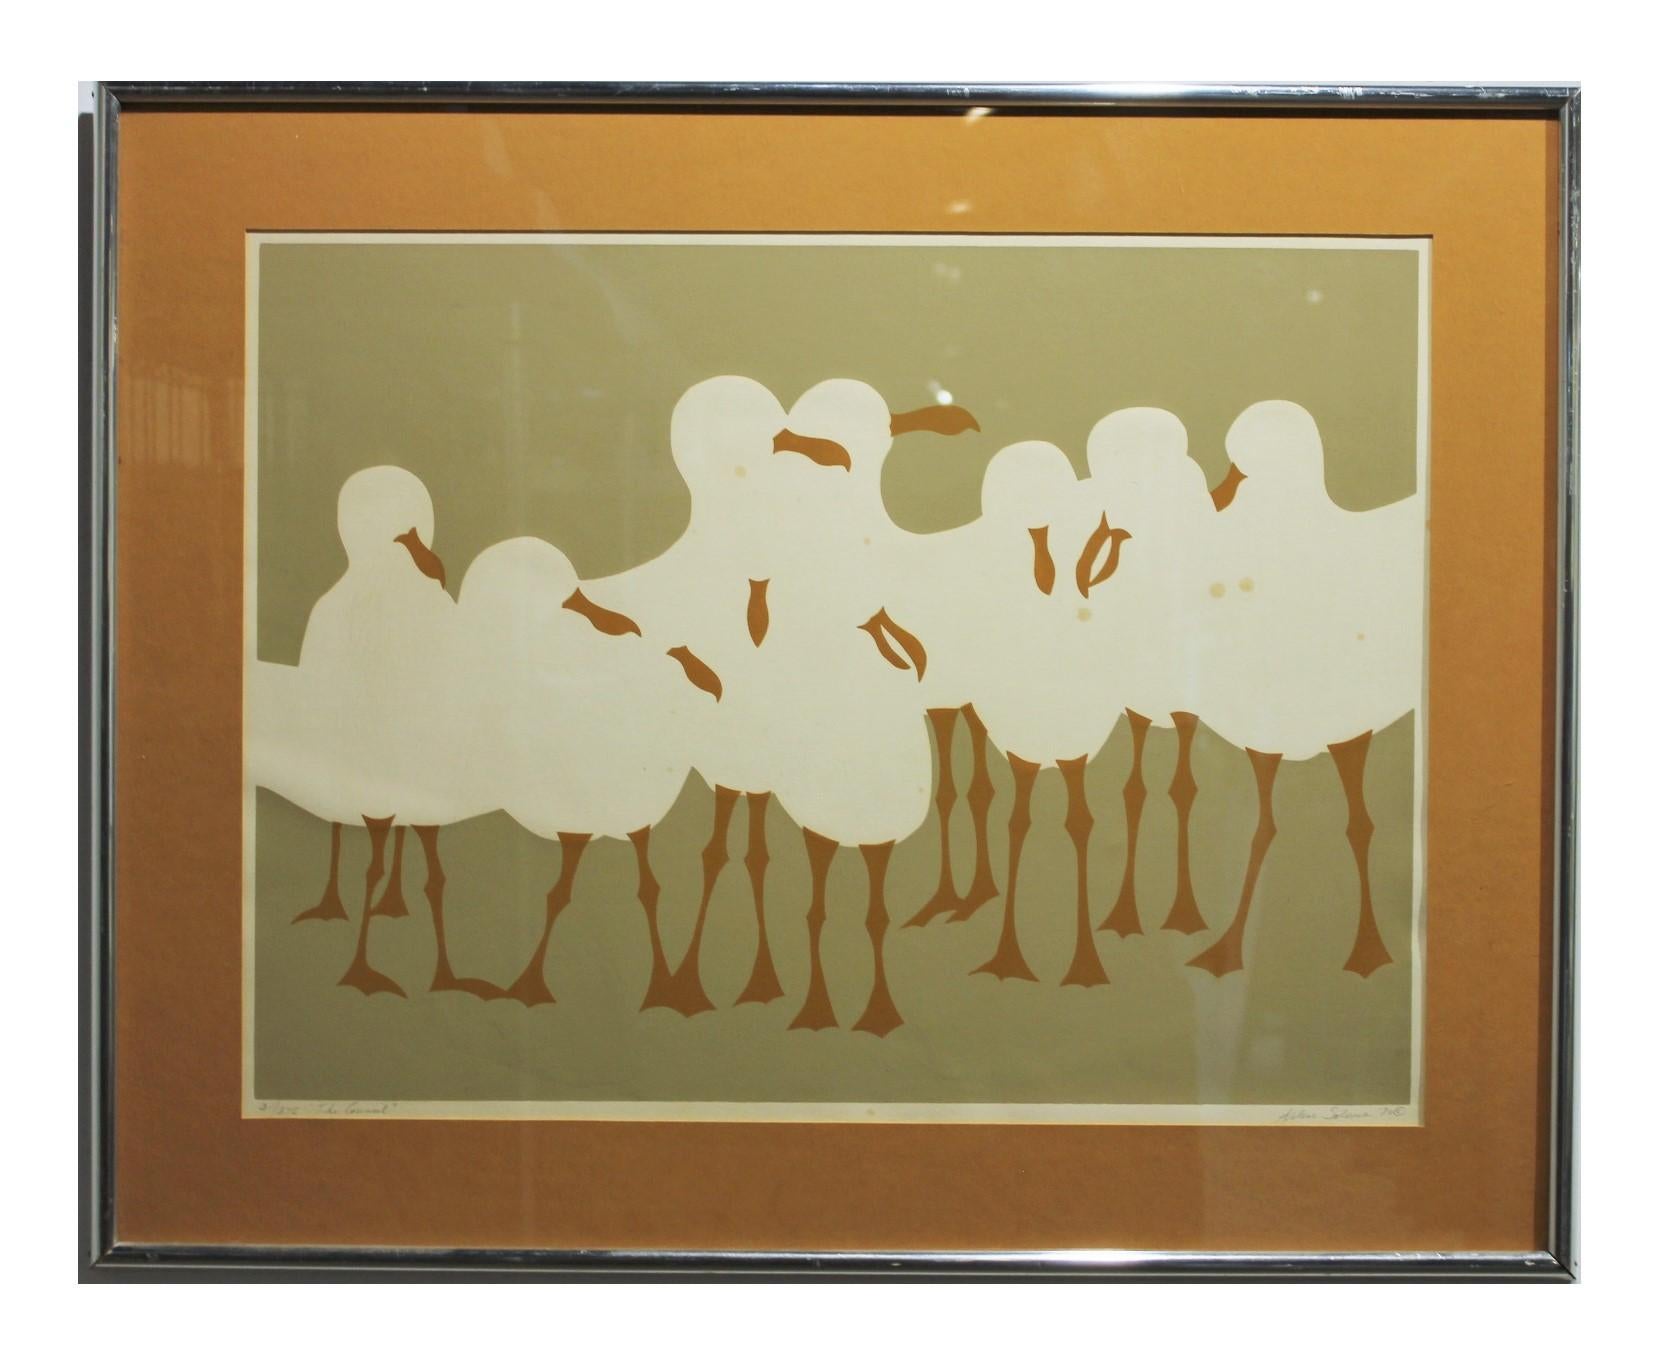 Arlene Solomon  Animal Print - "The Council" Minimalist Lithograph of Seagulls Edition 31 of 375